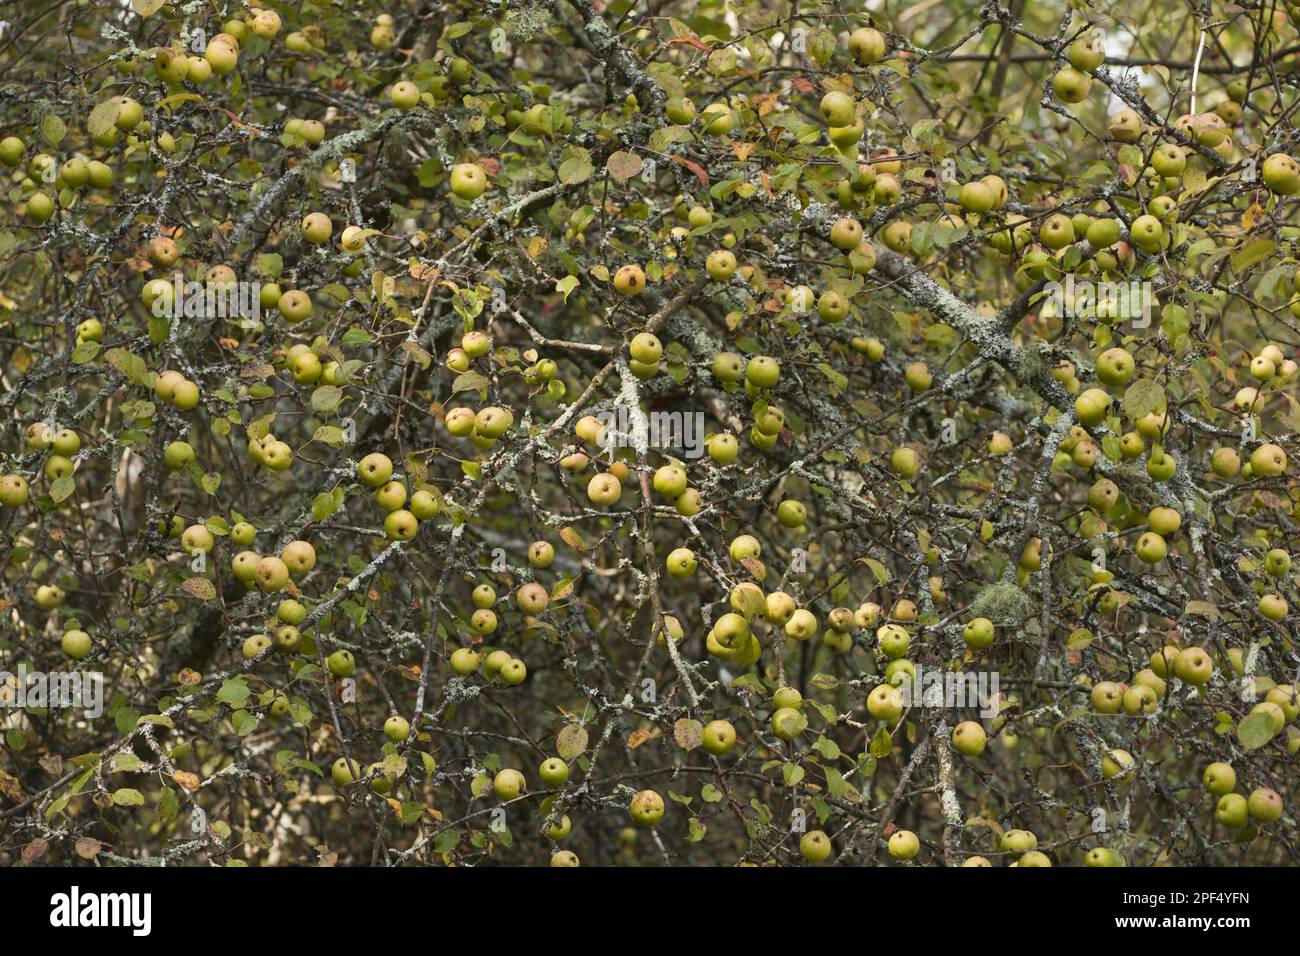 Crabapple, european crab apple (Malus sylvestris), Rosaceae, Wild Crabapple measure of fruit on tree, New Forest, Hampshire, England, United Kingdom Stock Photo